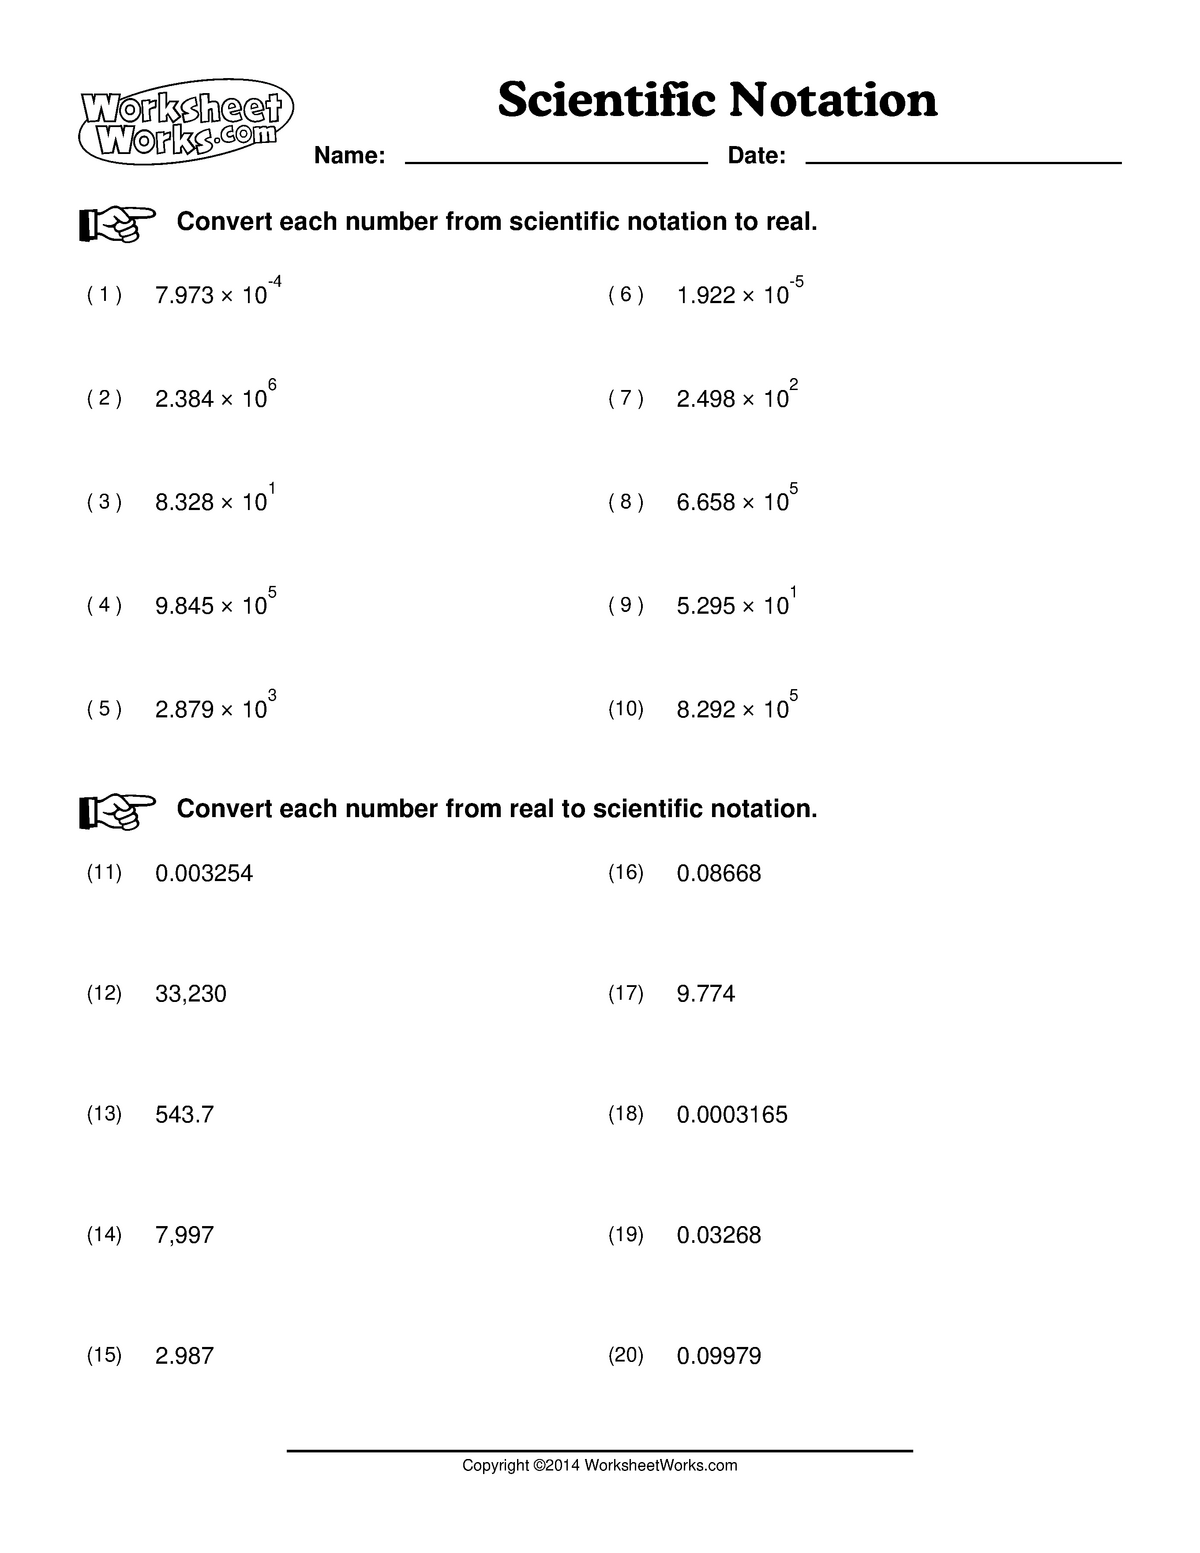 Scientific Notation Practice Problems - CHEM-CH25 - Chemistry Intended For Scientific Notation Worksheet Chemistry